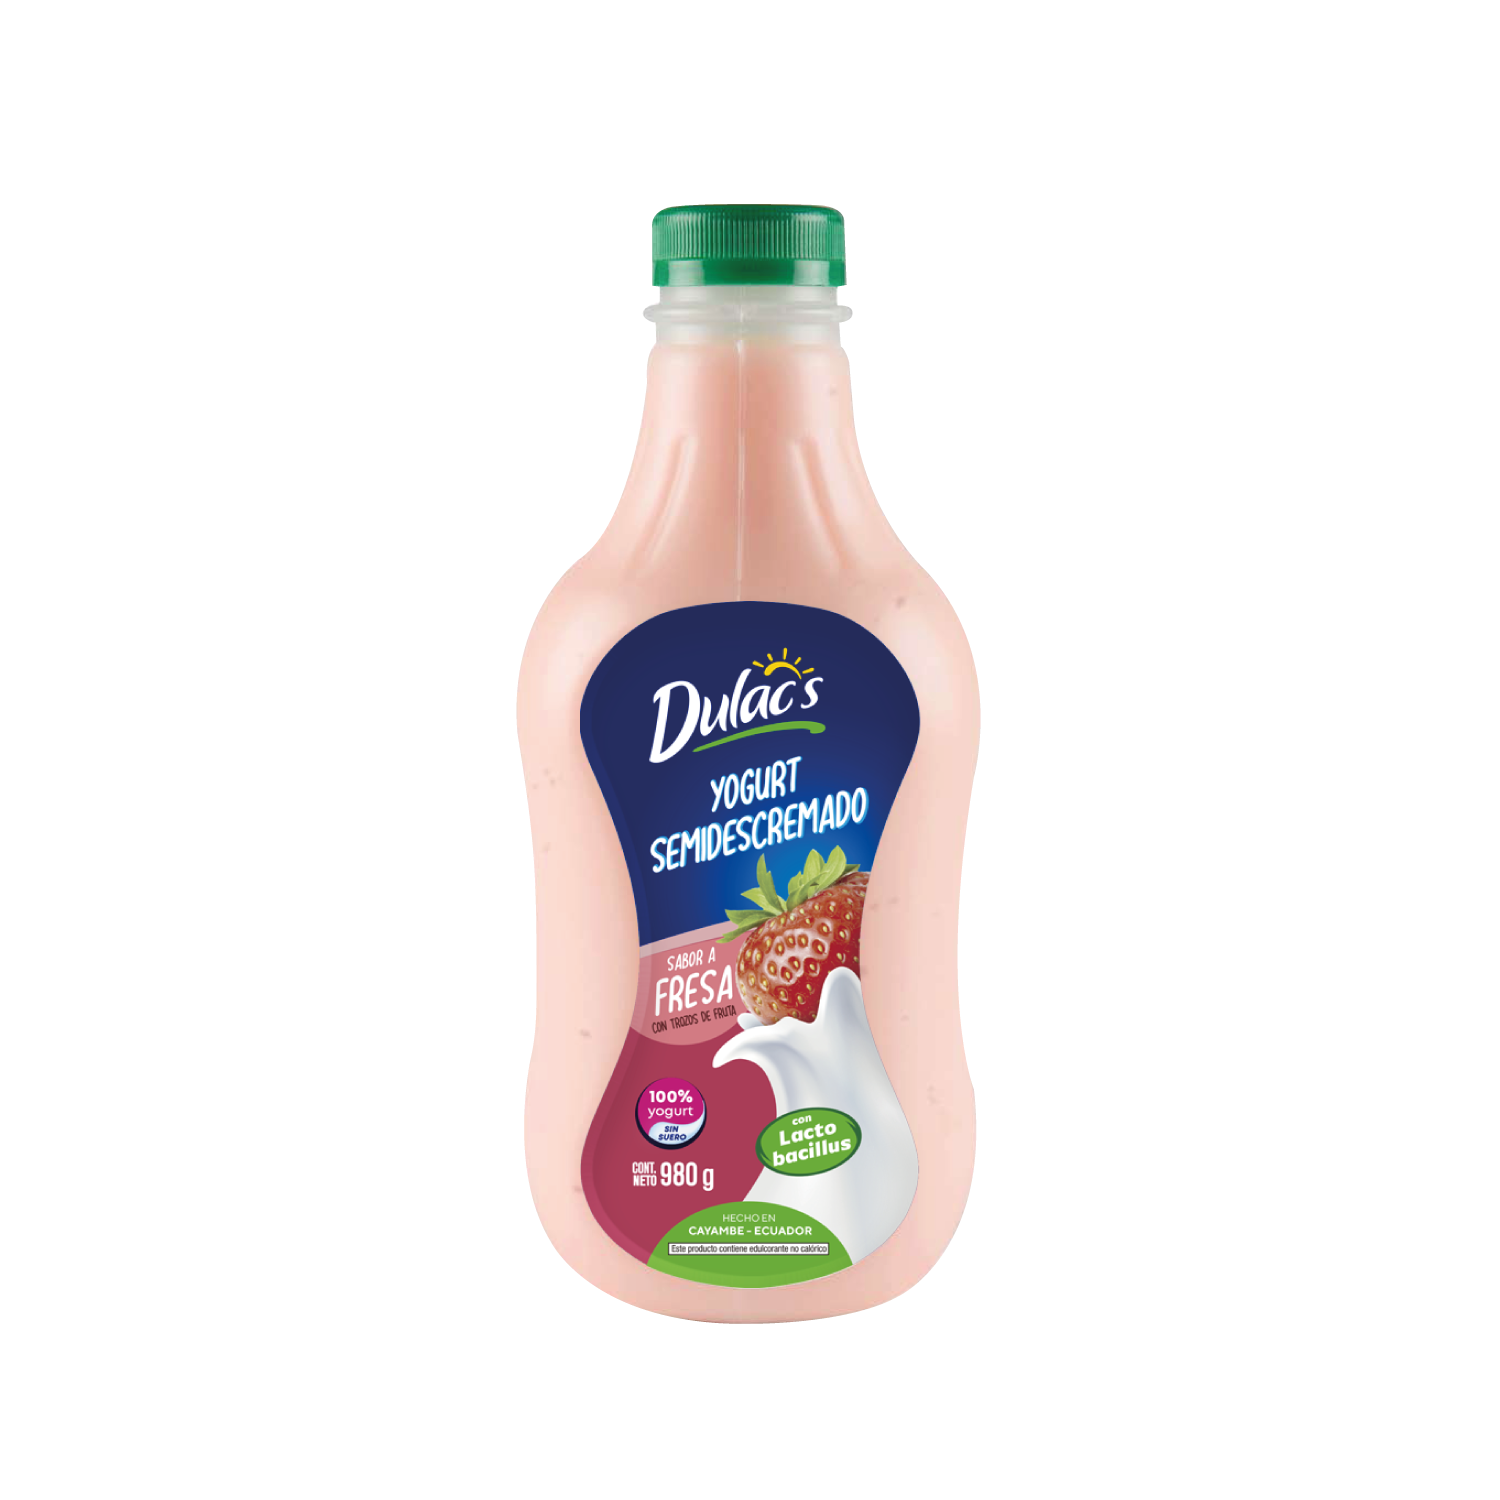 Dulacs Yogurt Frutas Semidescremado 980G